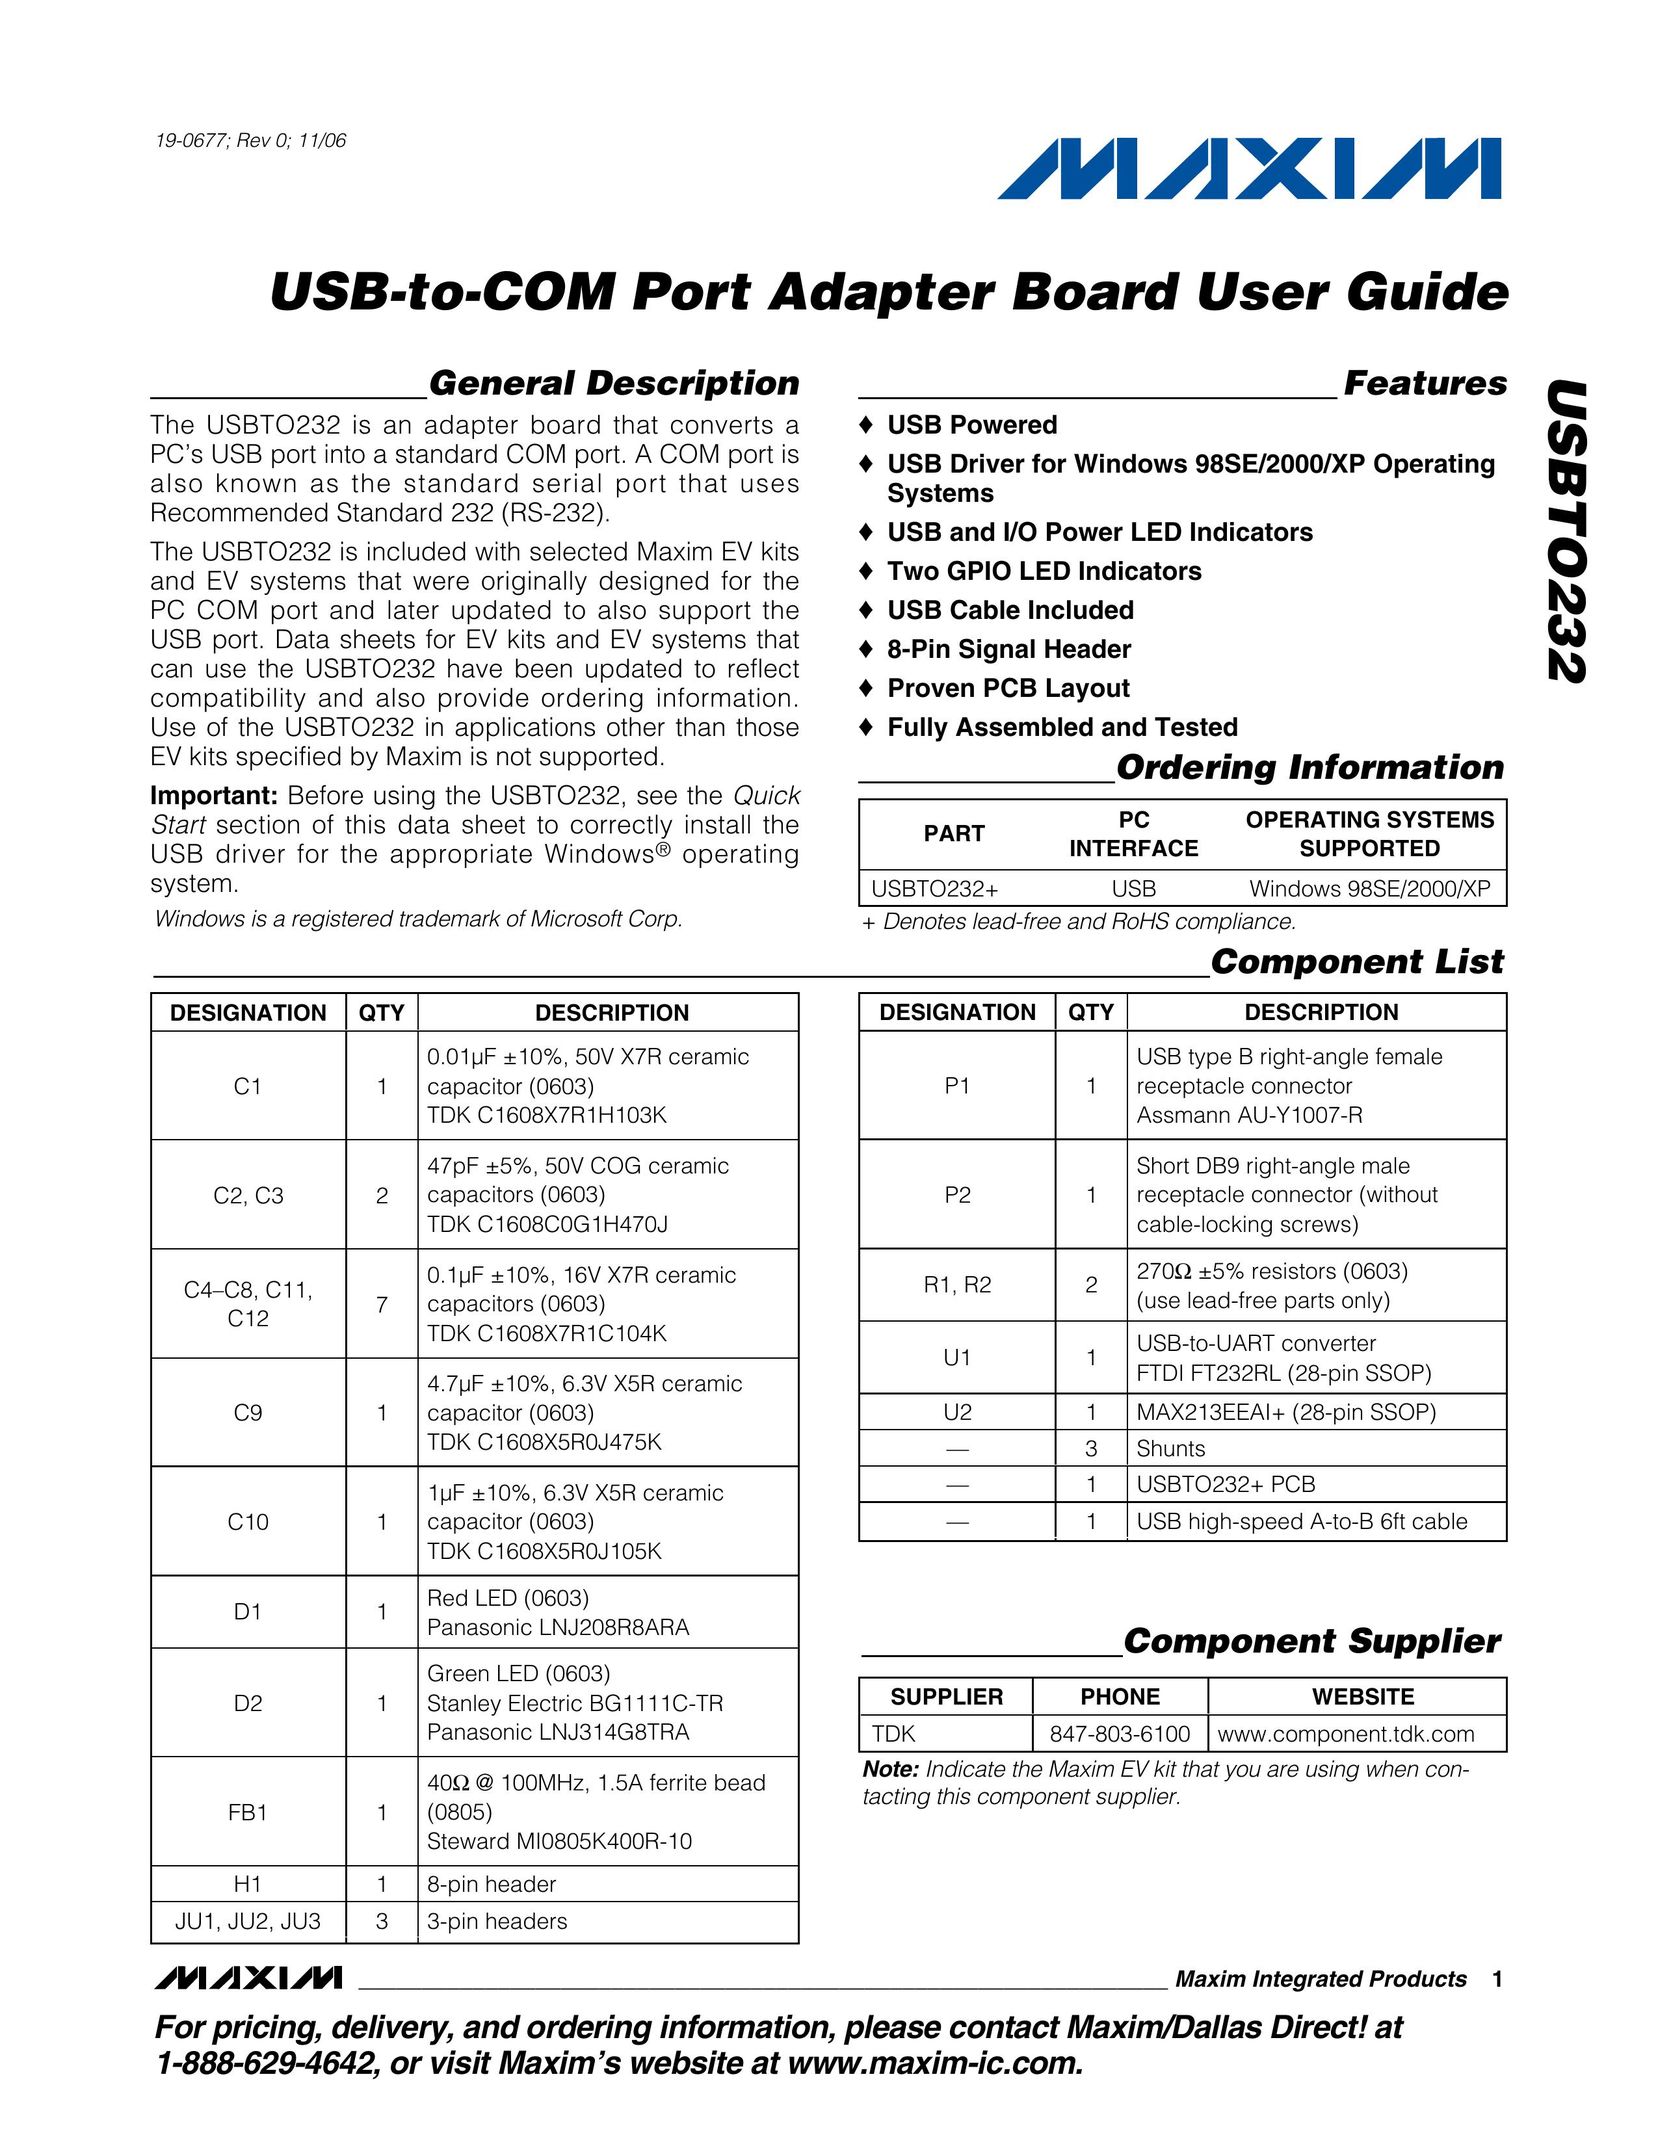 Maxim USBTO232 Network Card User Manual